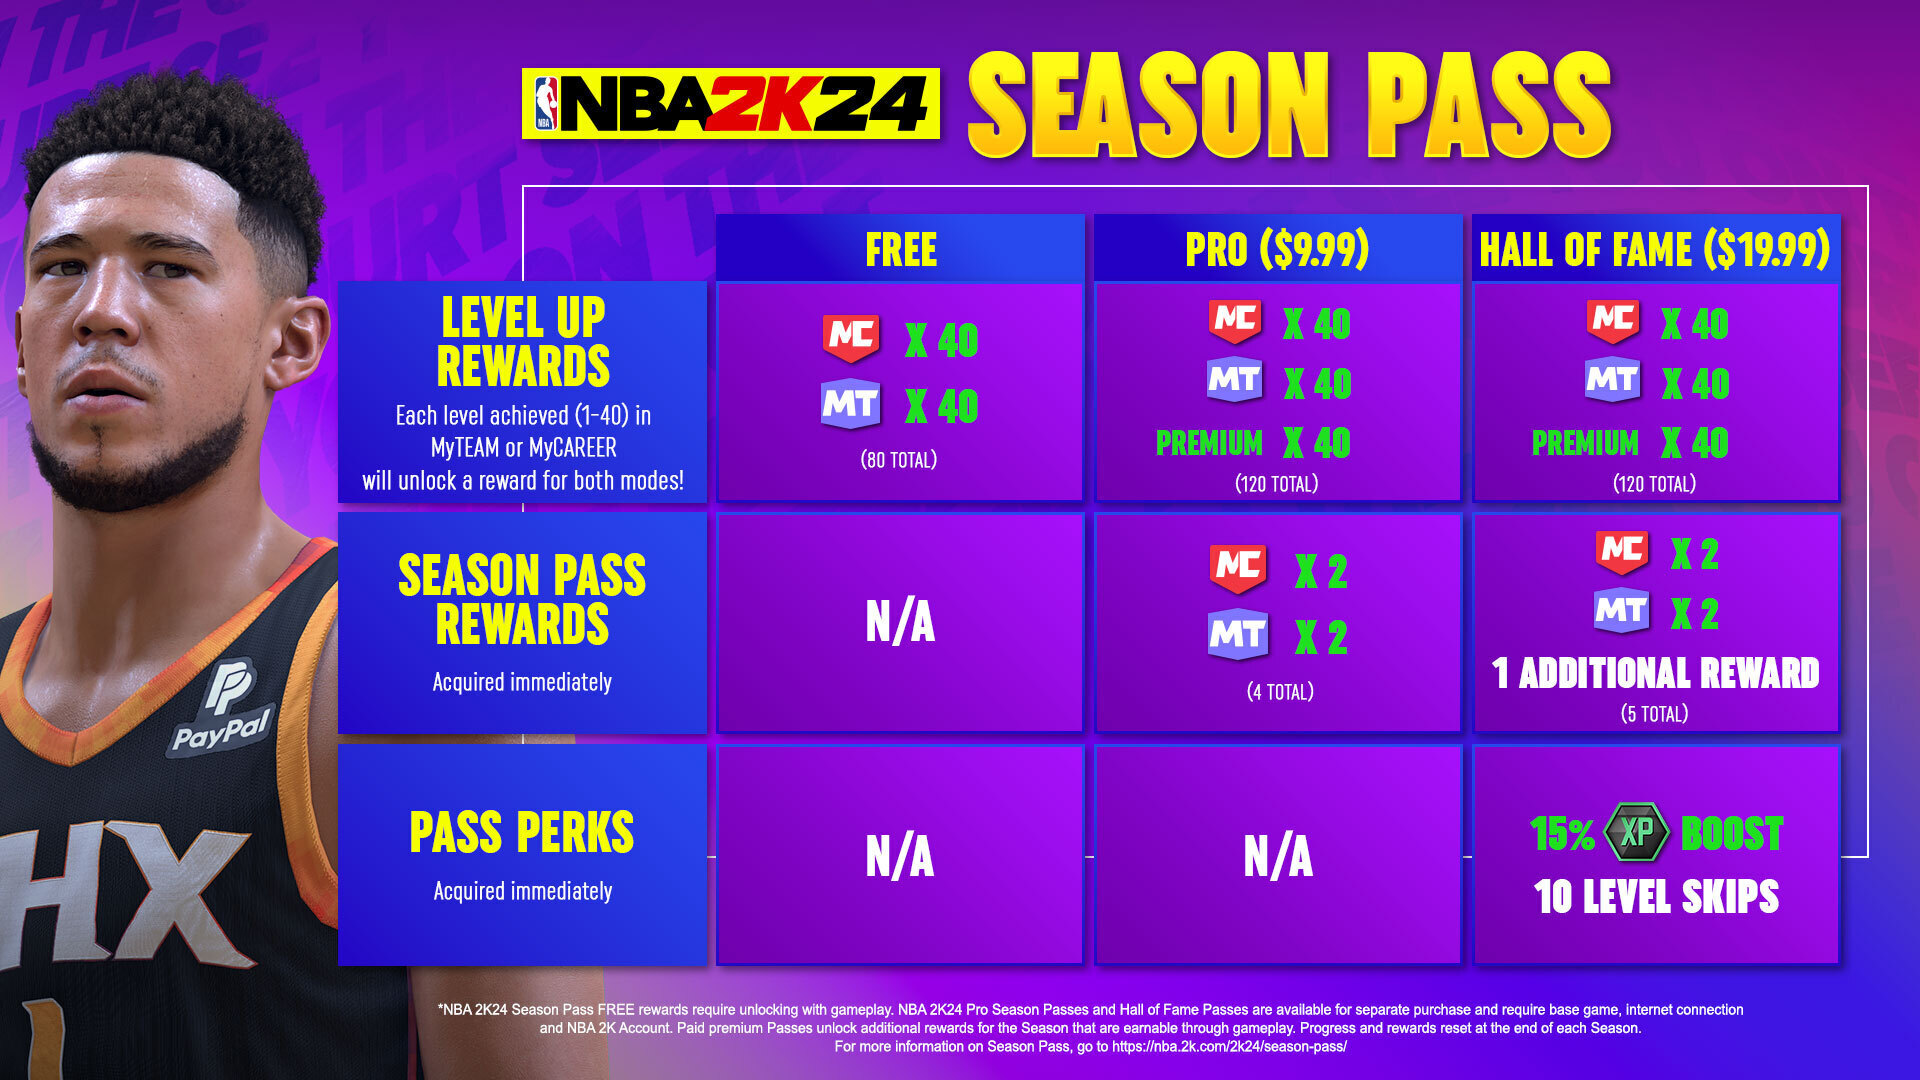 NBA 2K24 Season 3 Features Allen Iverson - Arrives on December 1